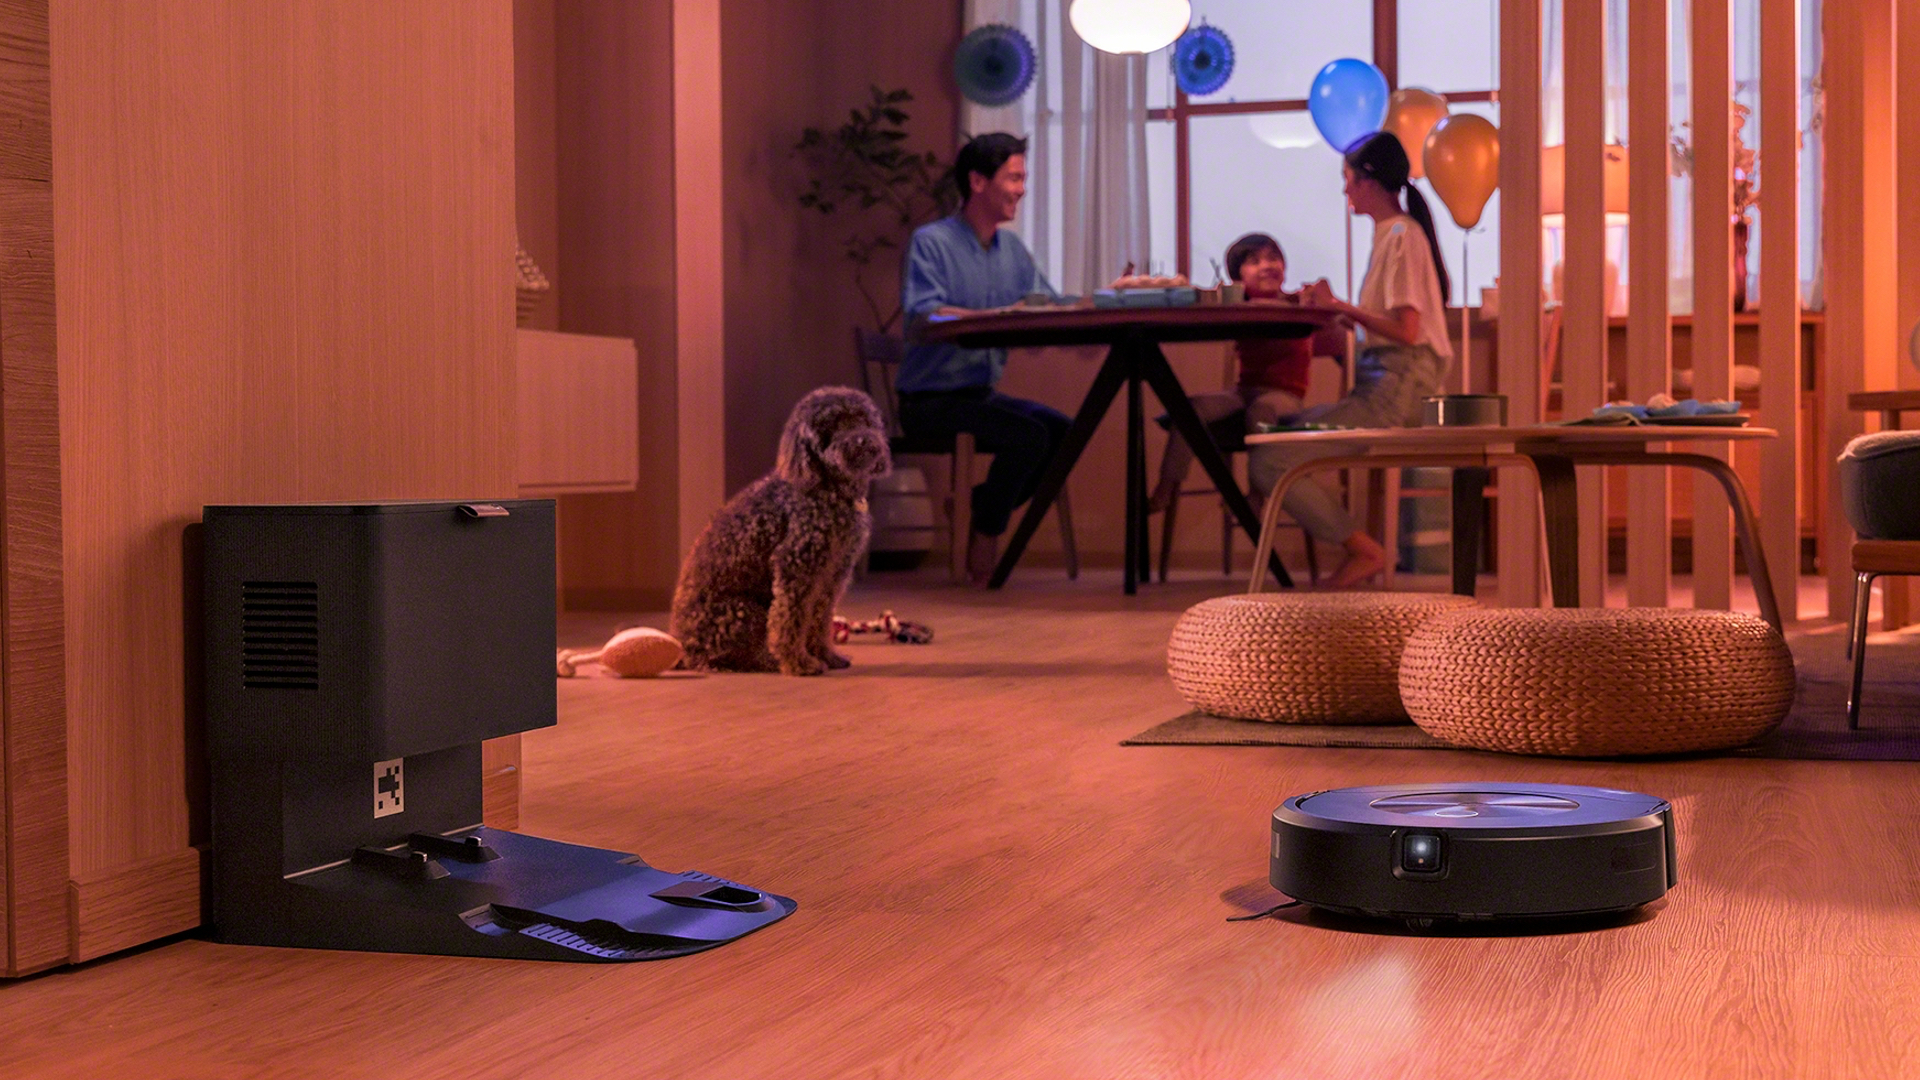 iRobot Roomba Combo j7+ Robot Vacuum & Mop